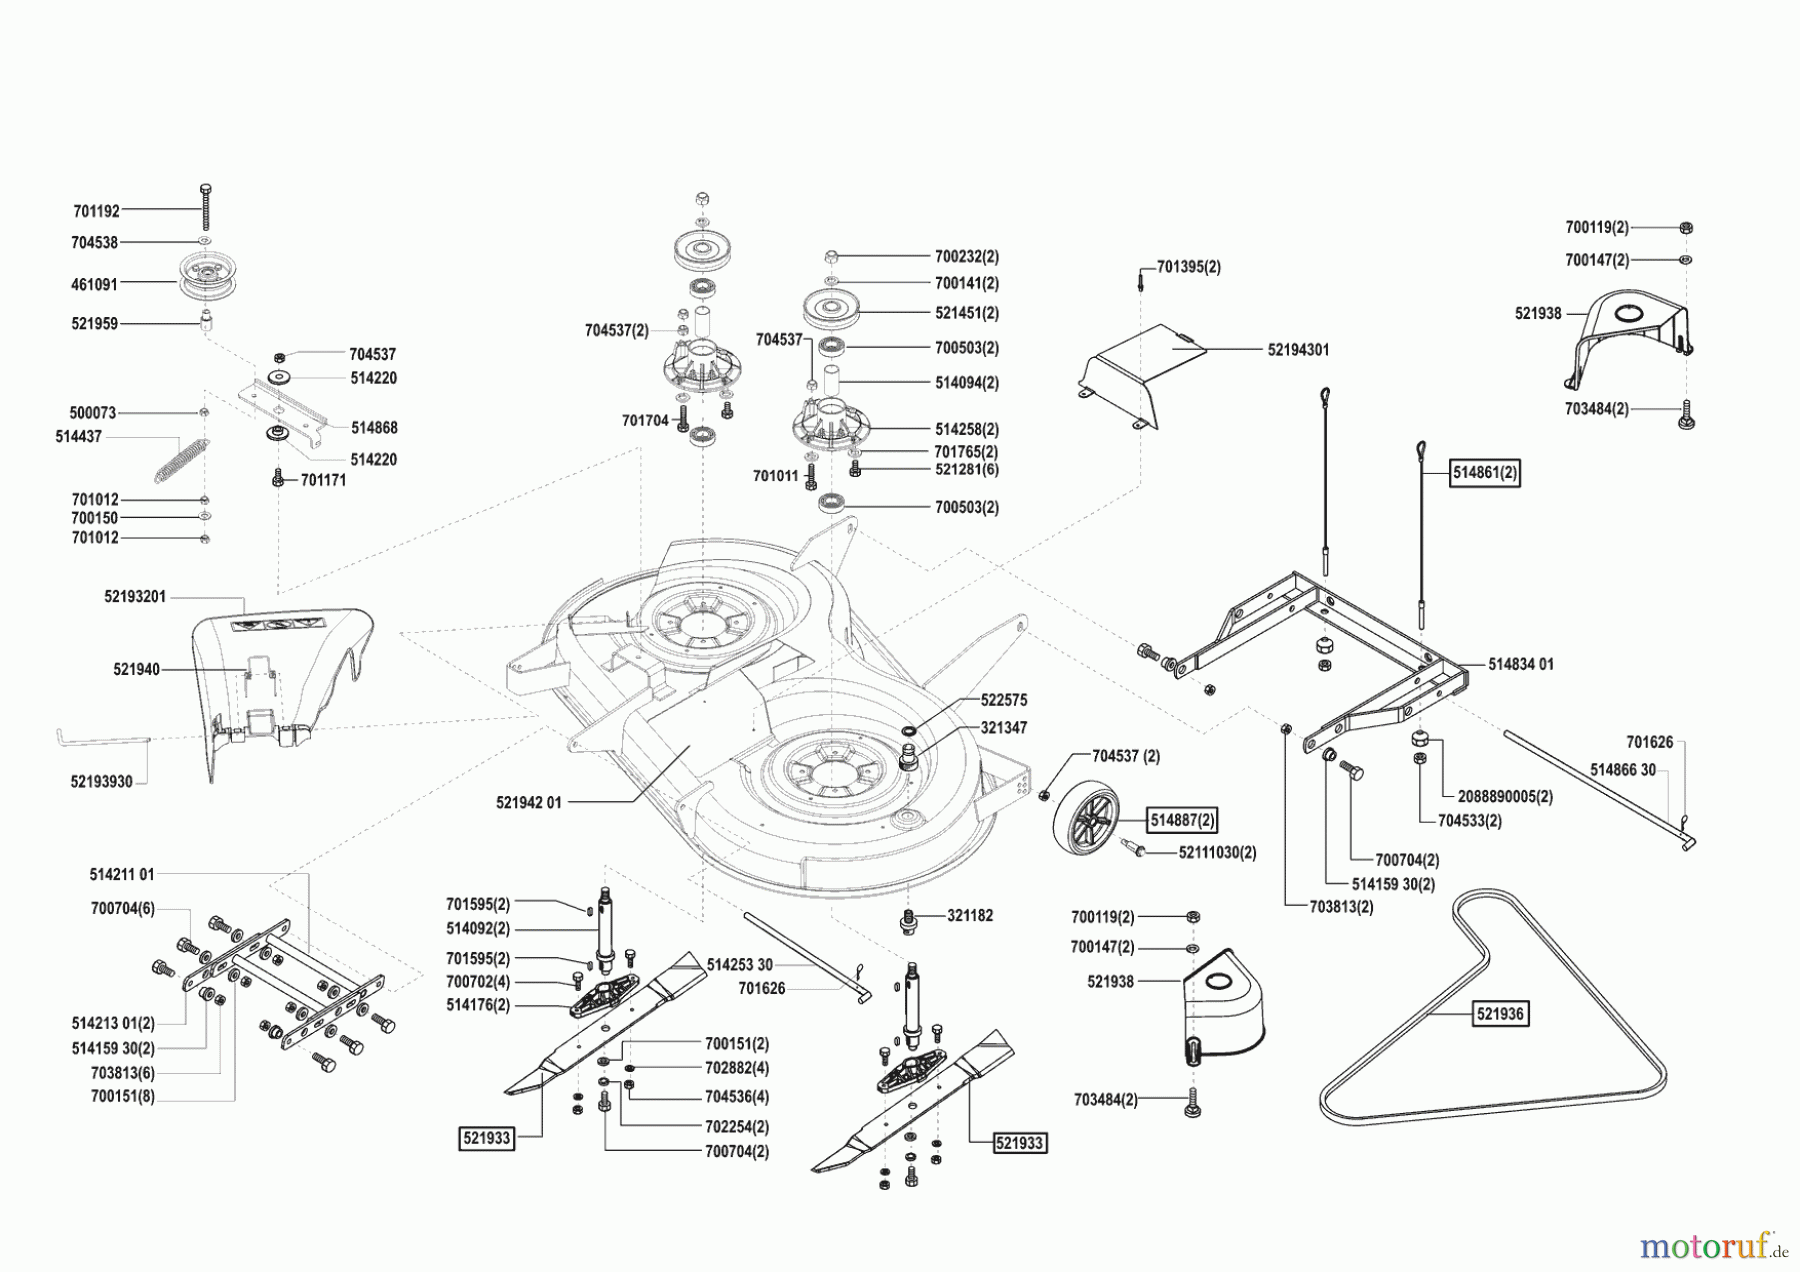  AL-KO Gartentechnik Rasentraktor Comfort T1000S Seite 5